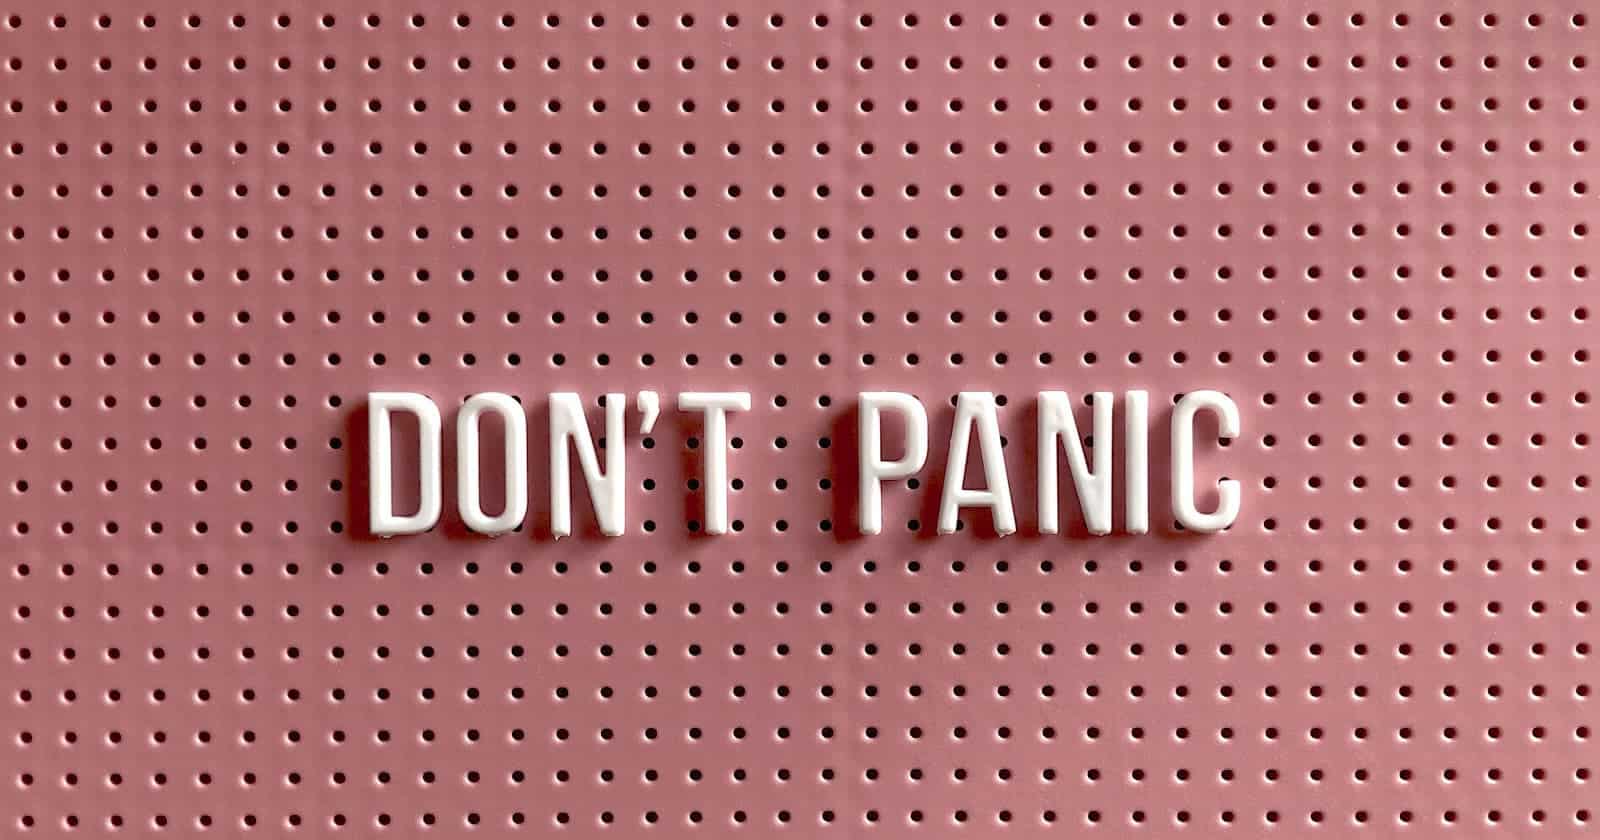 Website Down - Don't Panic